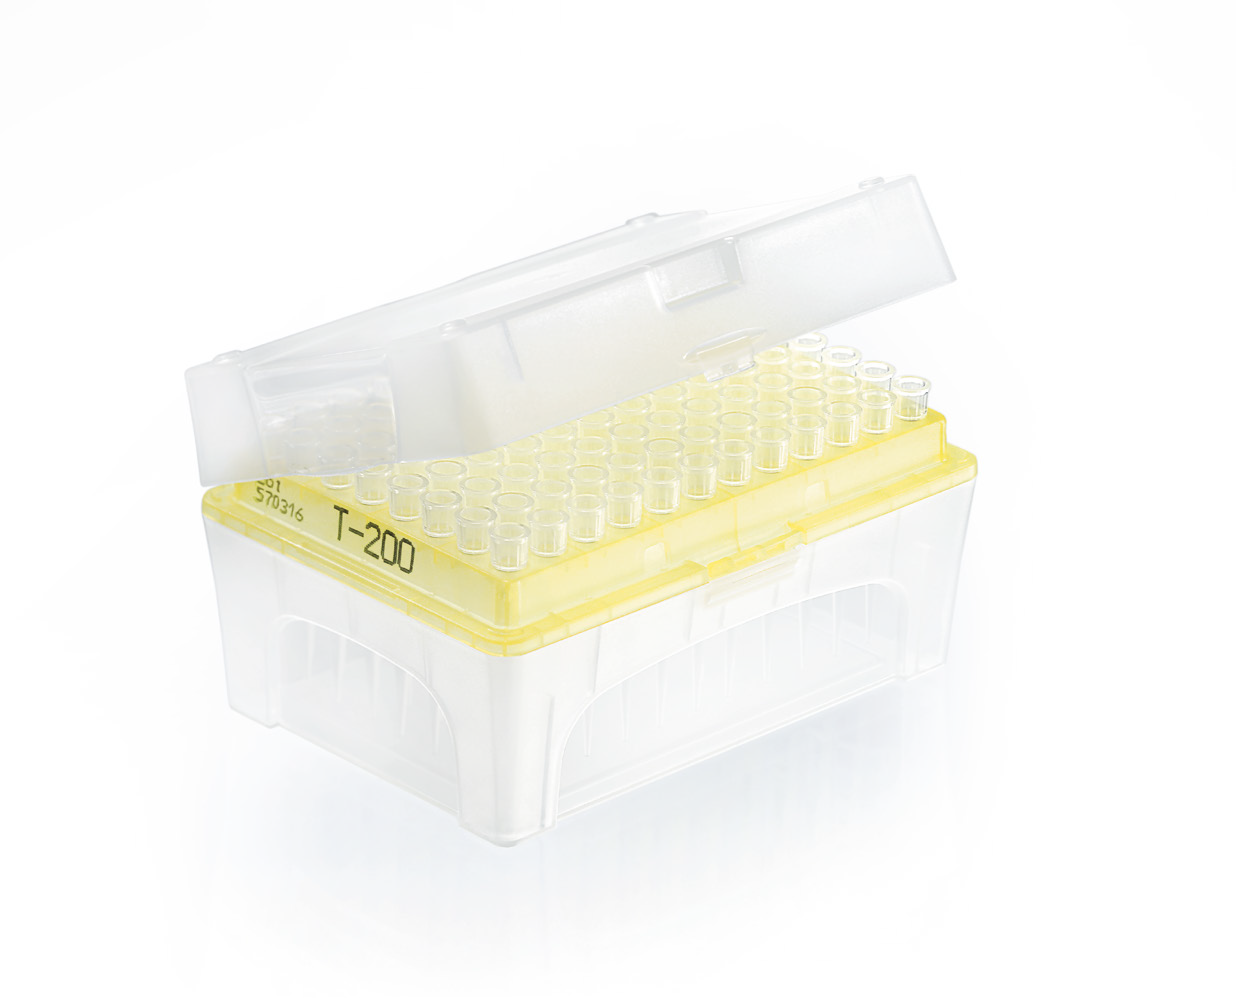 Filter tips rack DNA-/RNase-free IVD TipBox  50 - 1000 µl, PCK=480